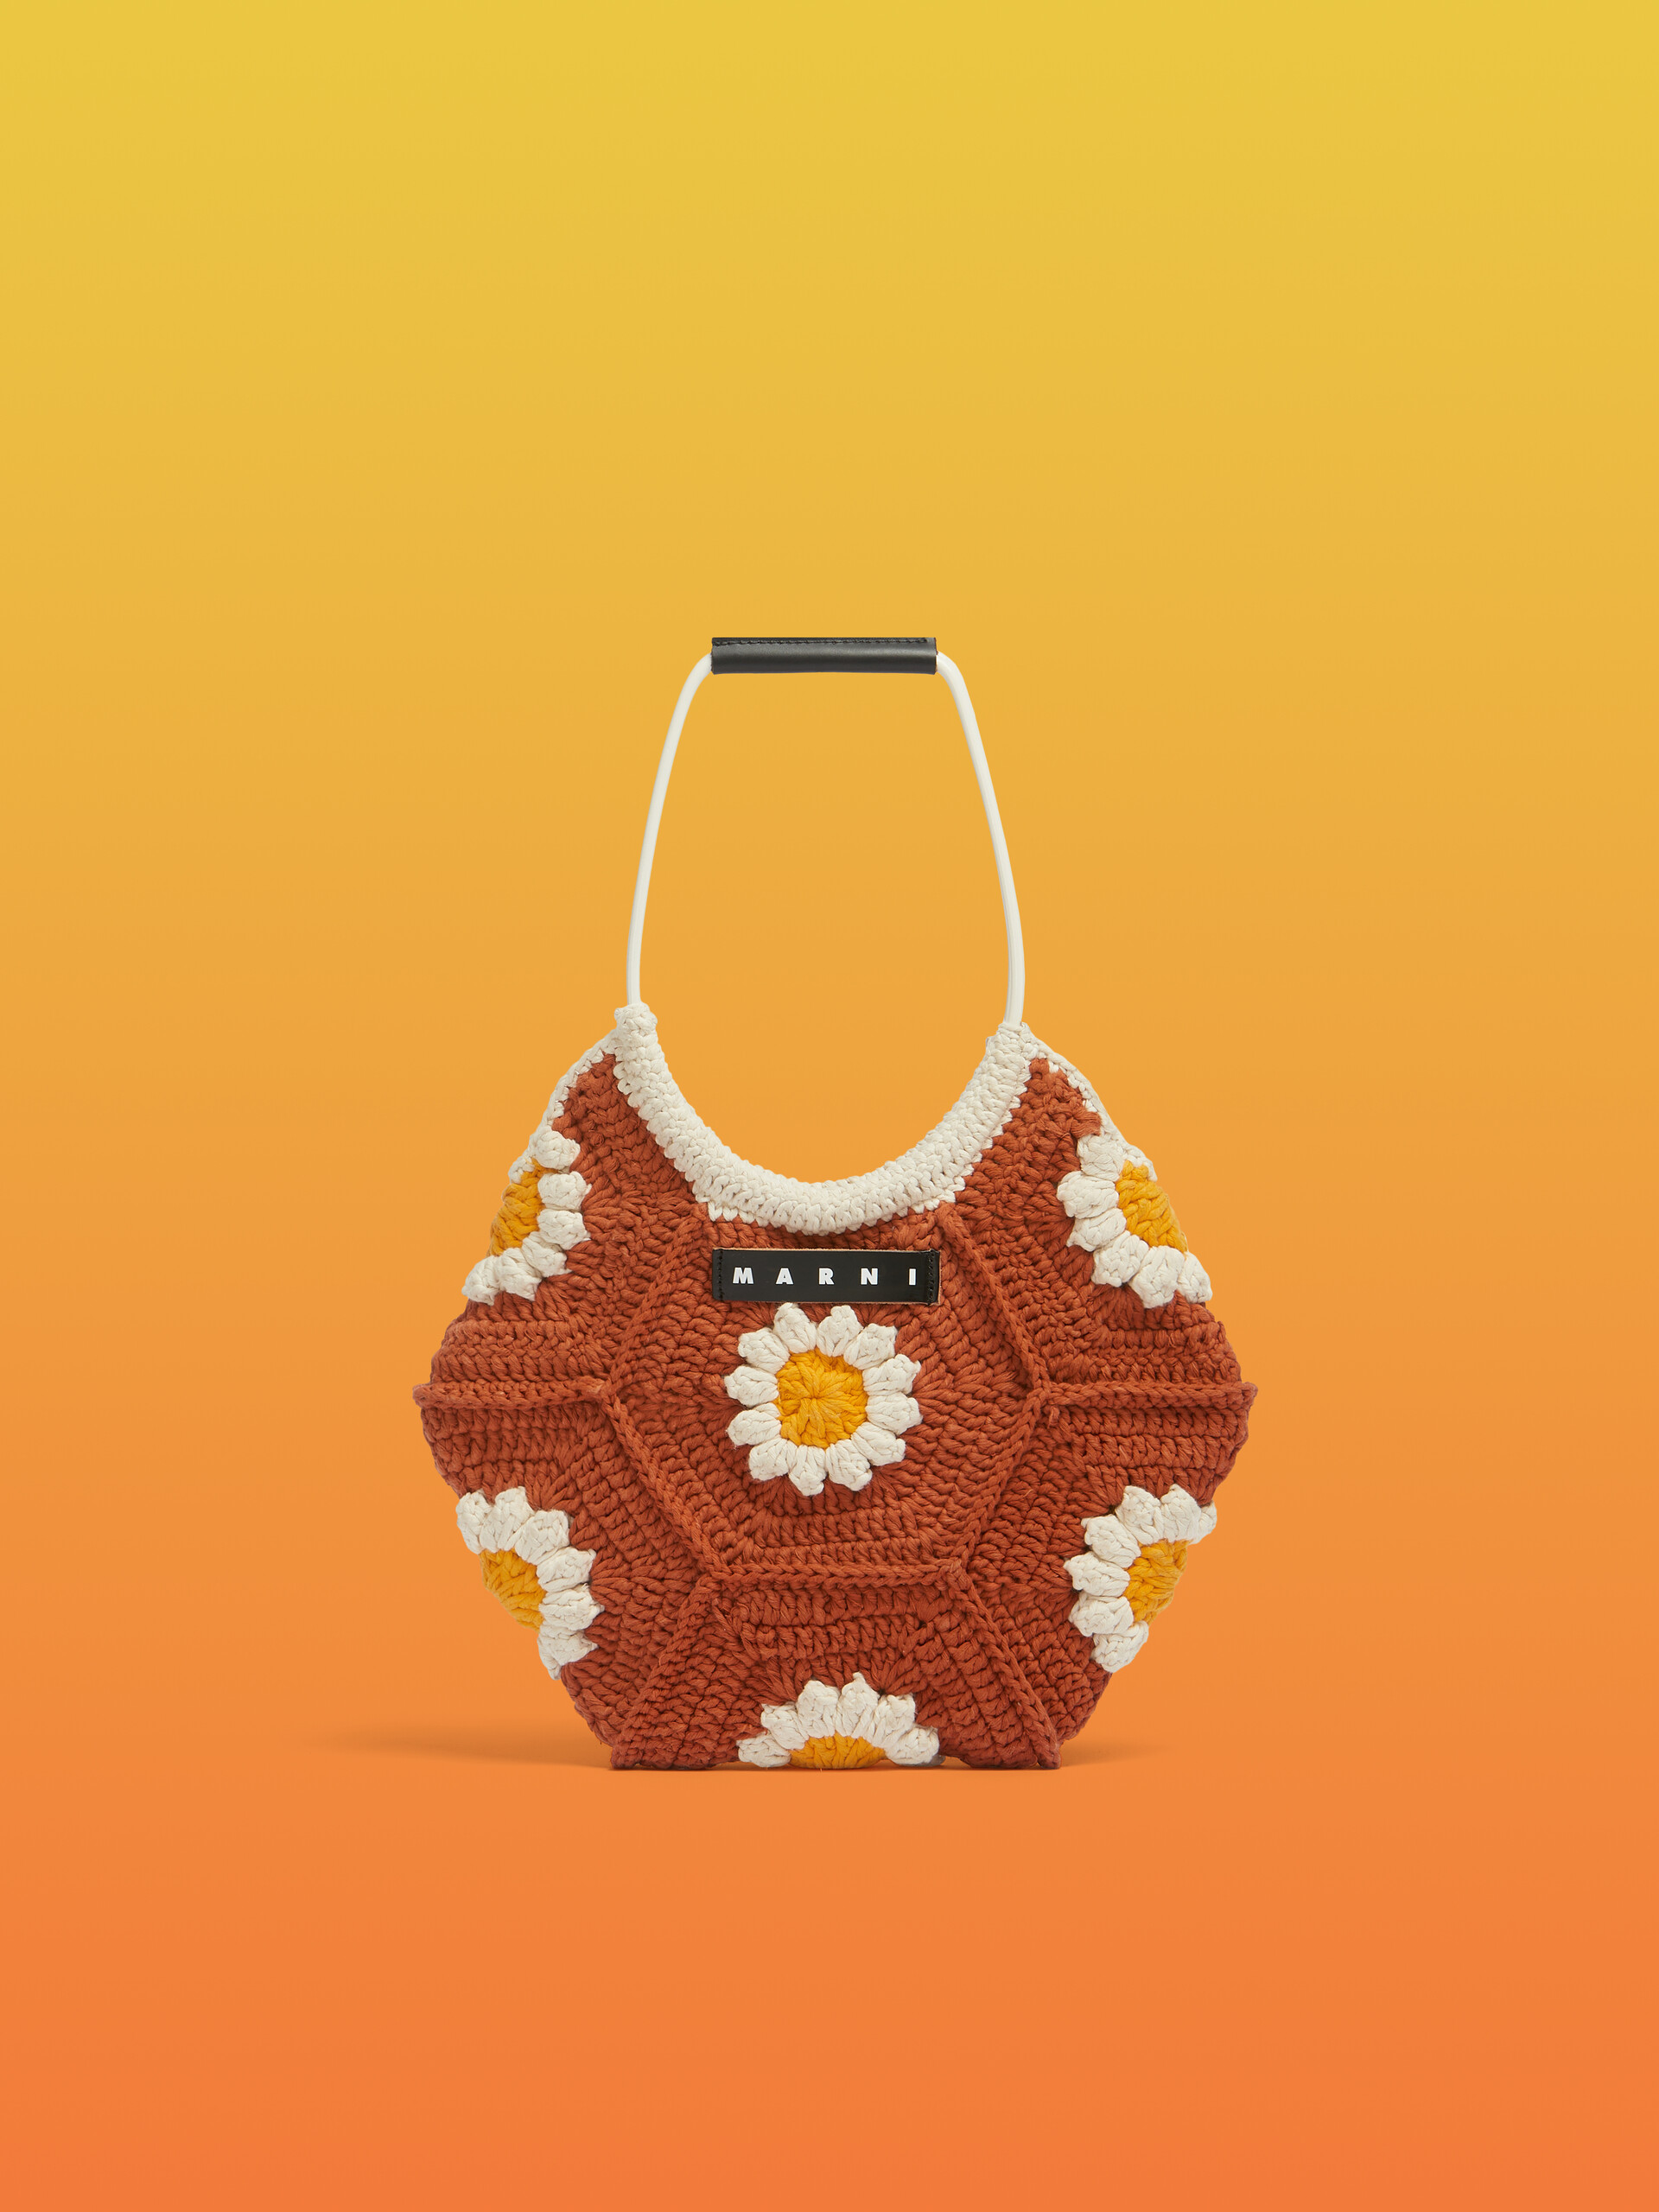 Blue flower cotton crochet MARNI MARKET handbag - Shopping Bags - Image 1